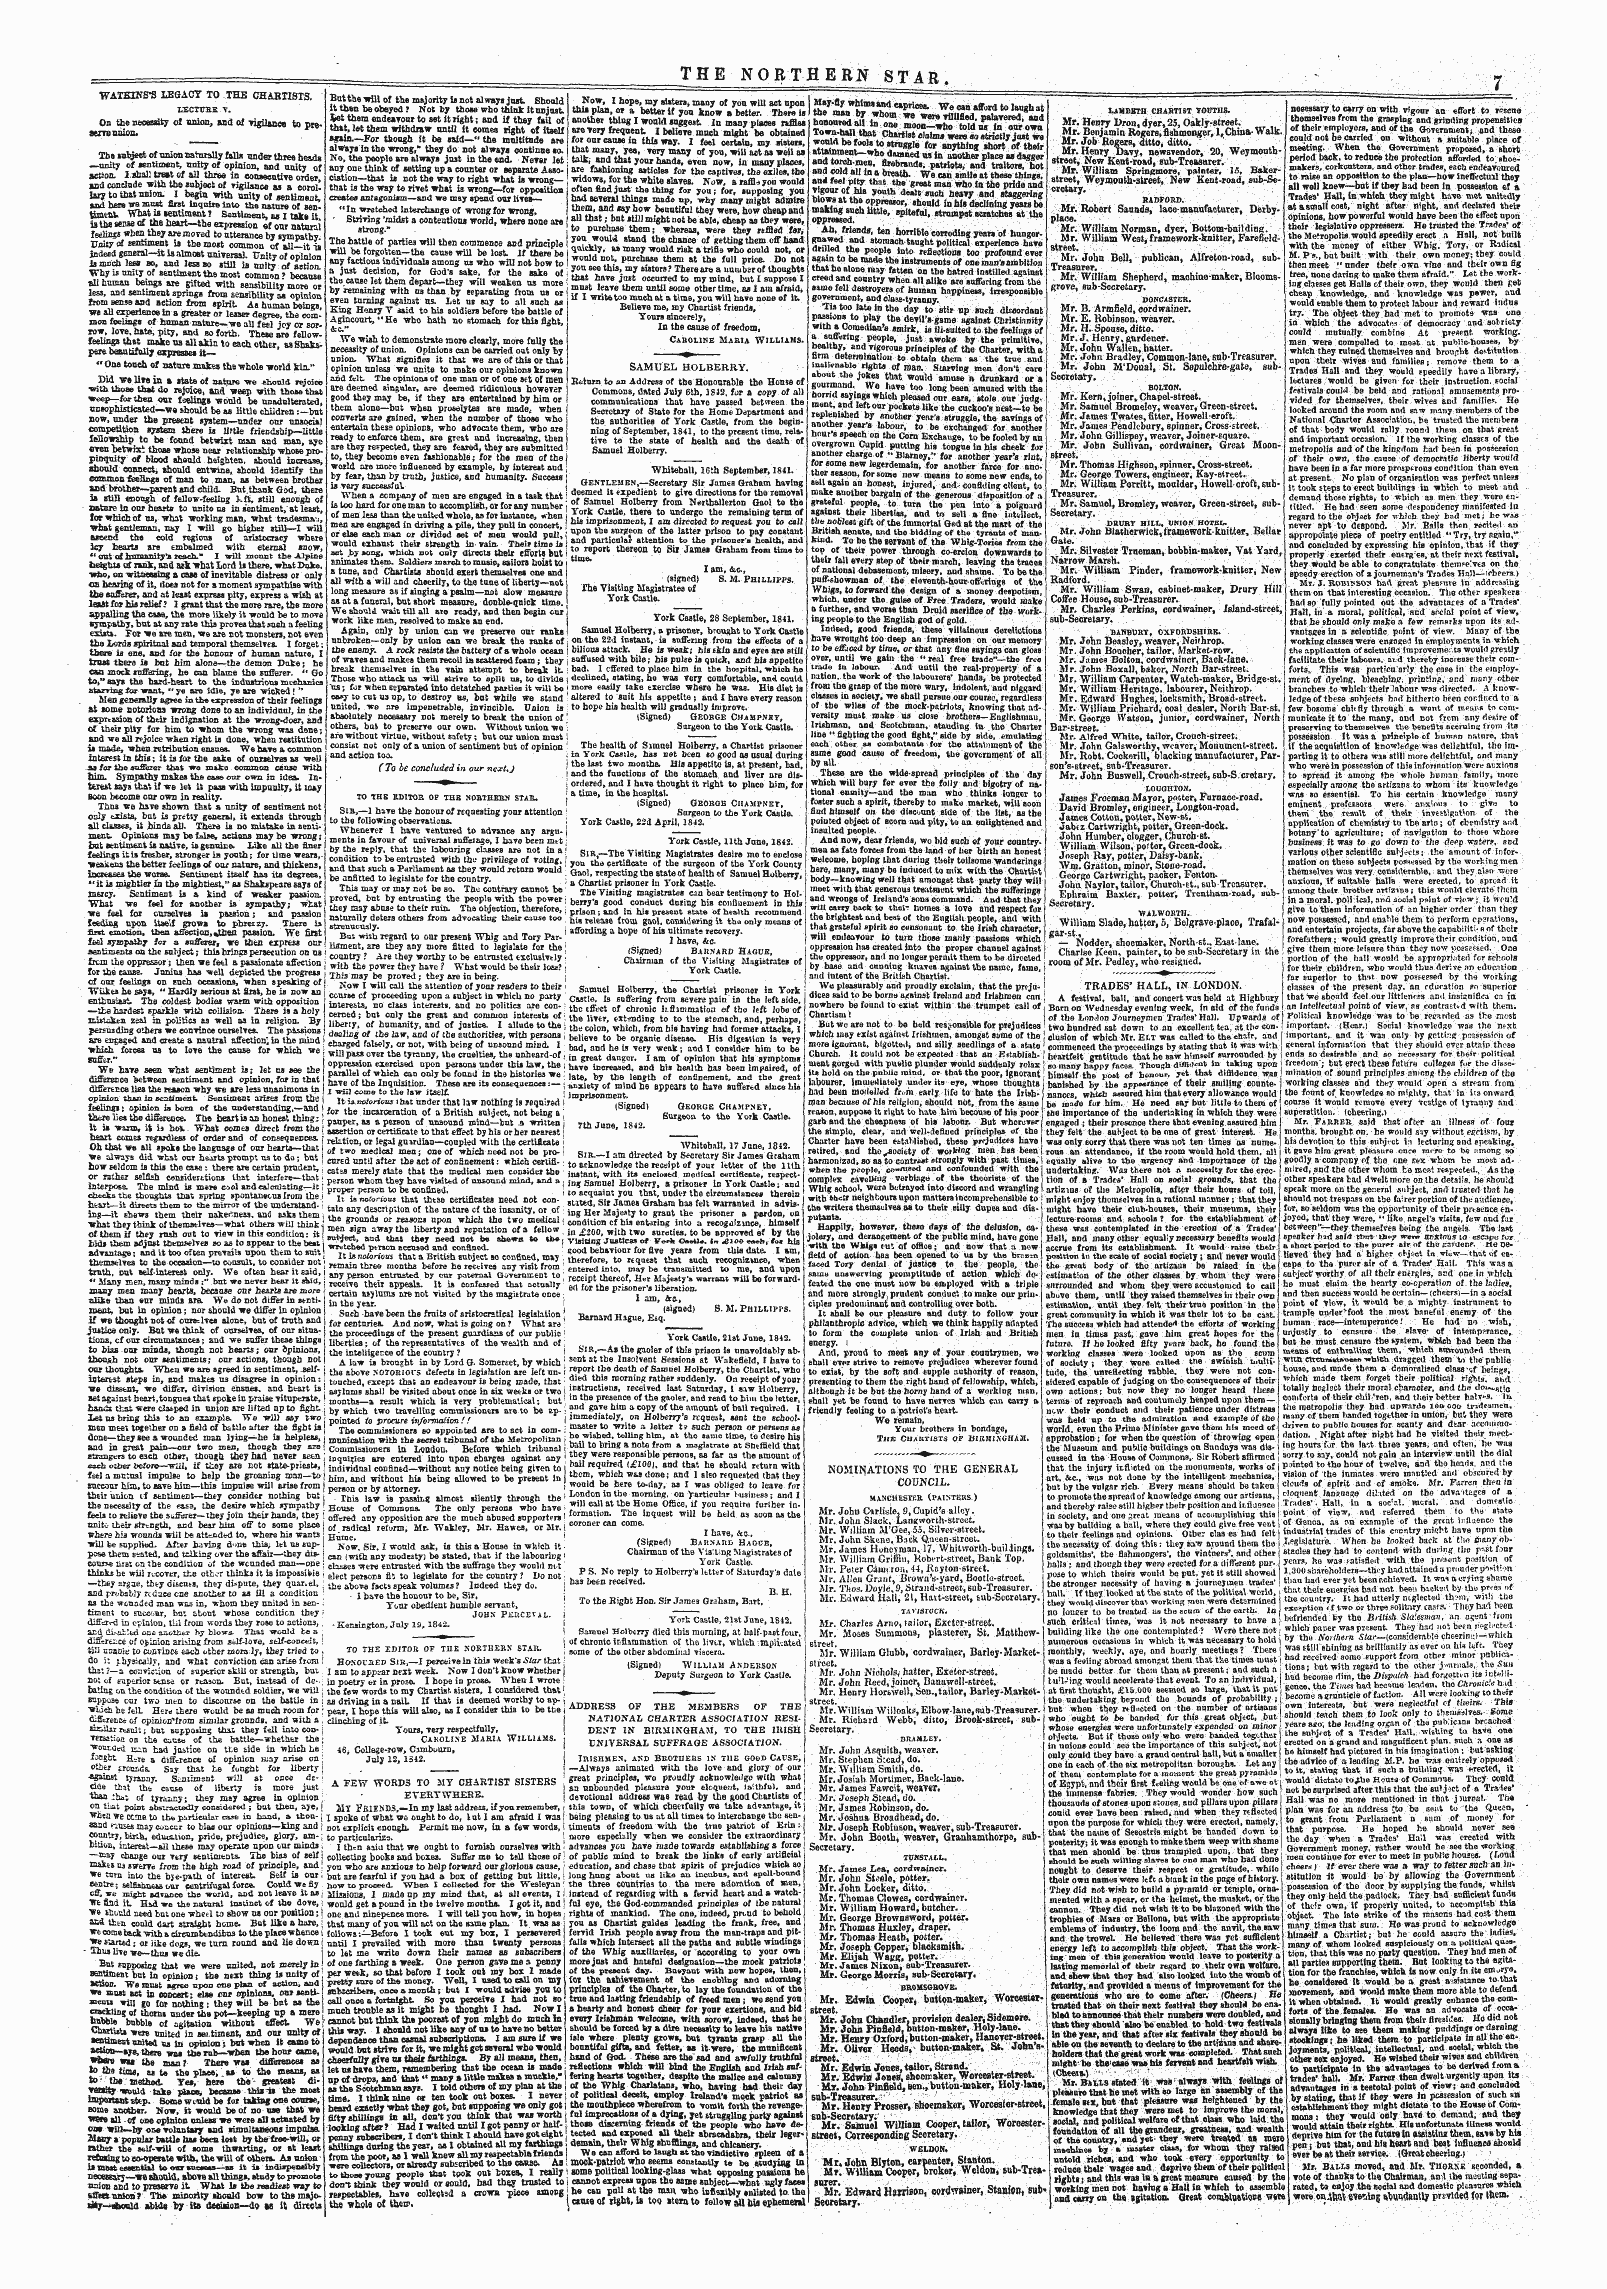 Northern Star (1837-1852): jS F Y, 4th edition: 7